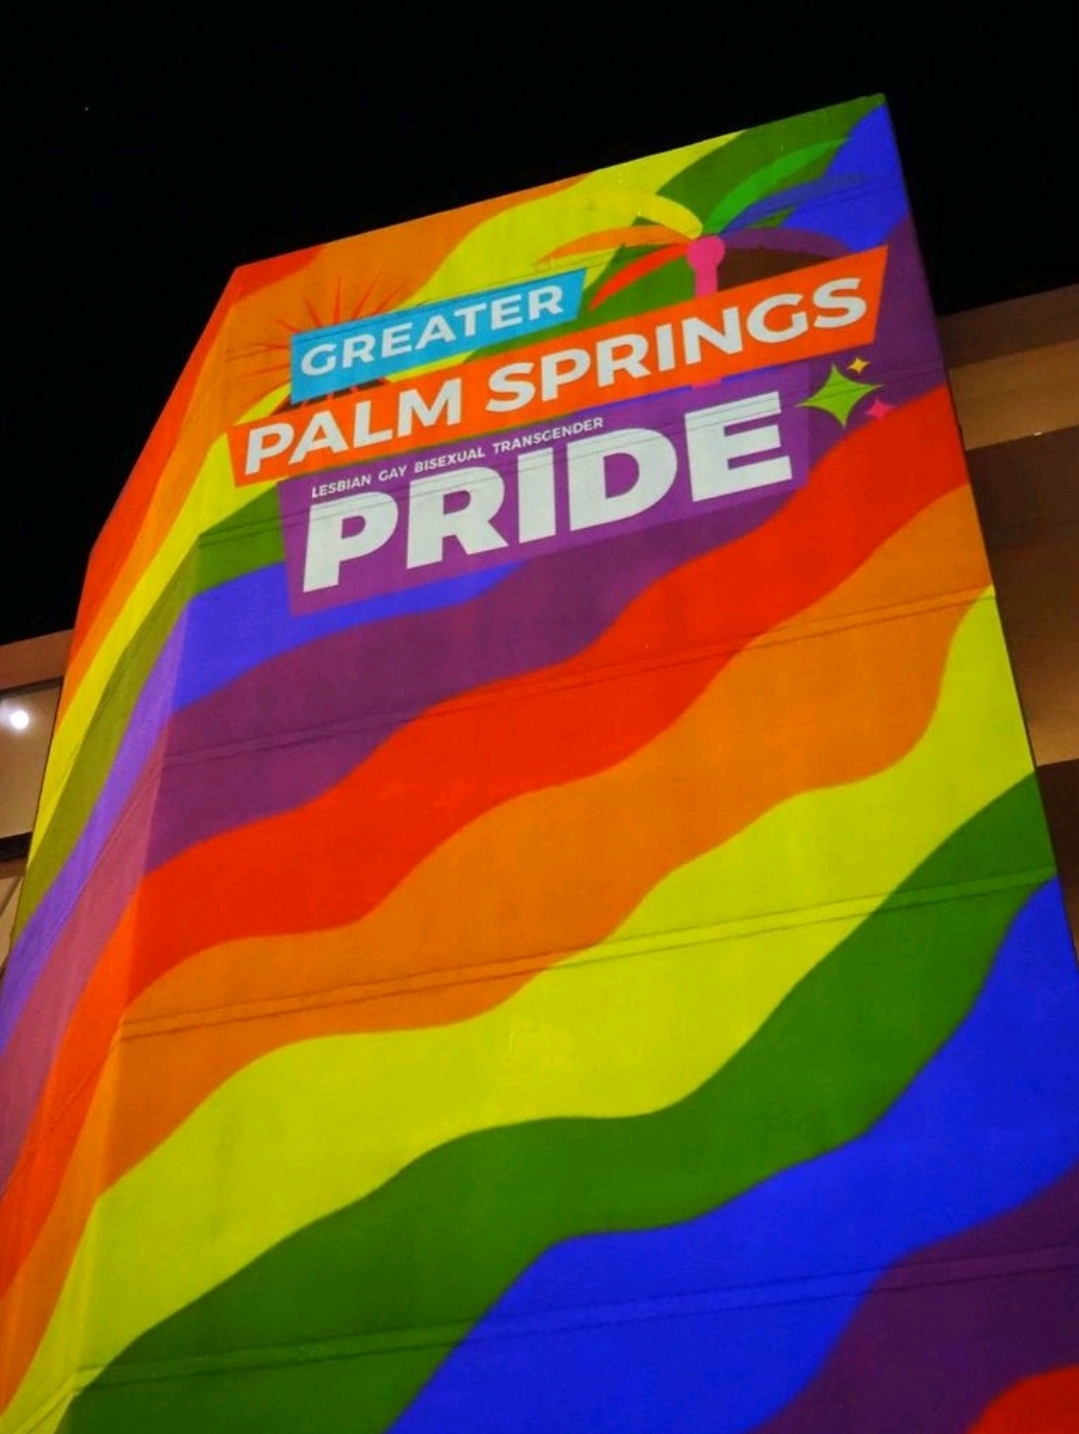 Palm Springs Pride